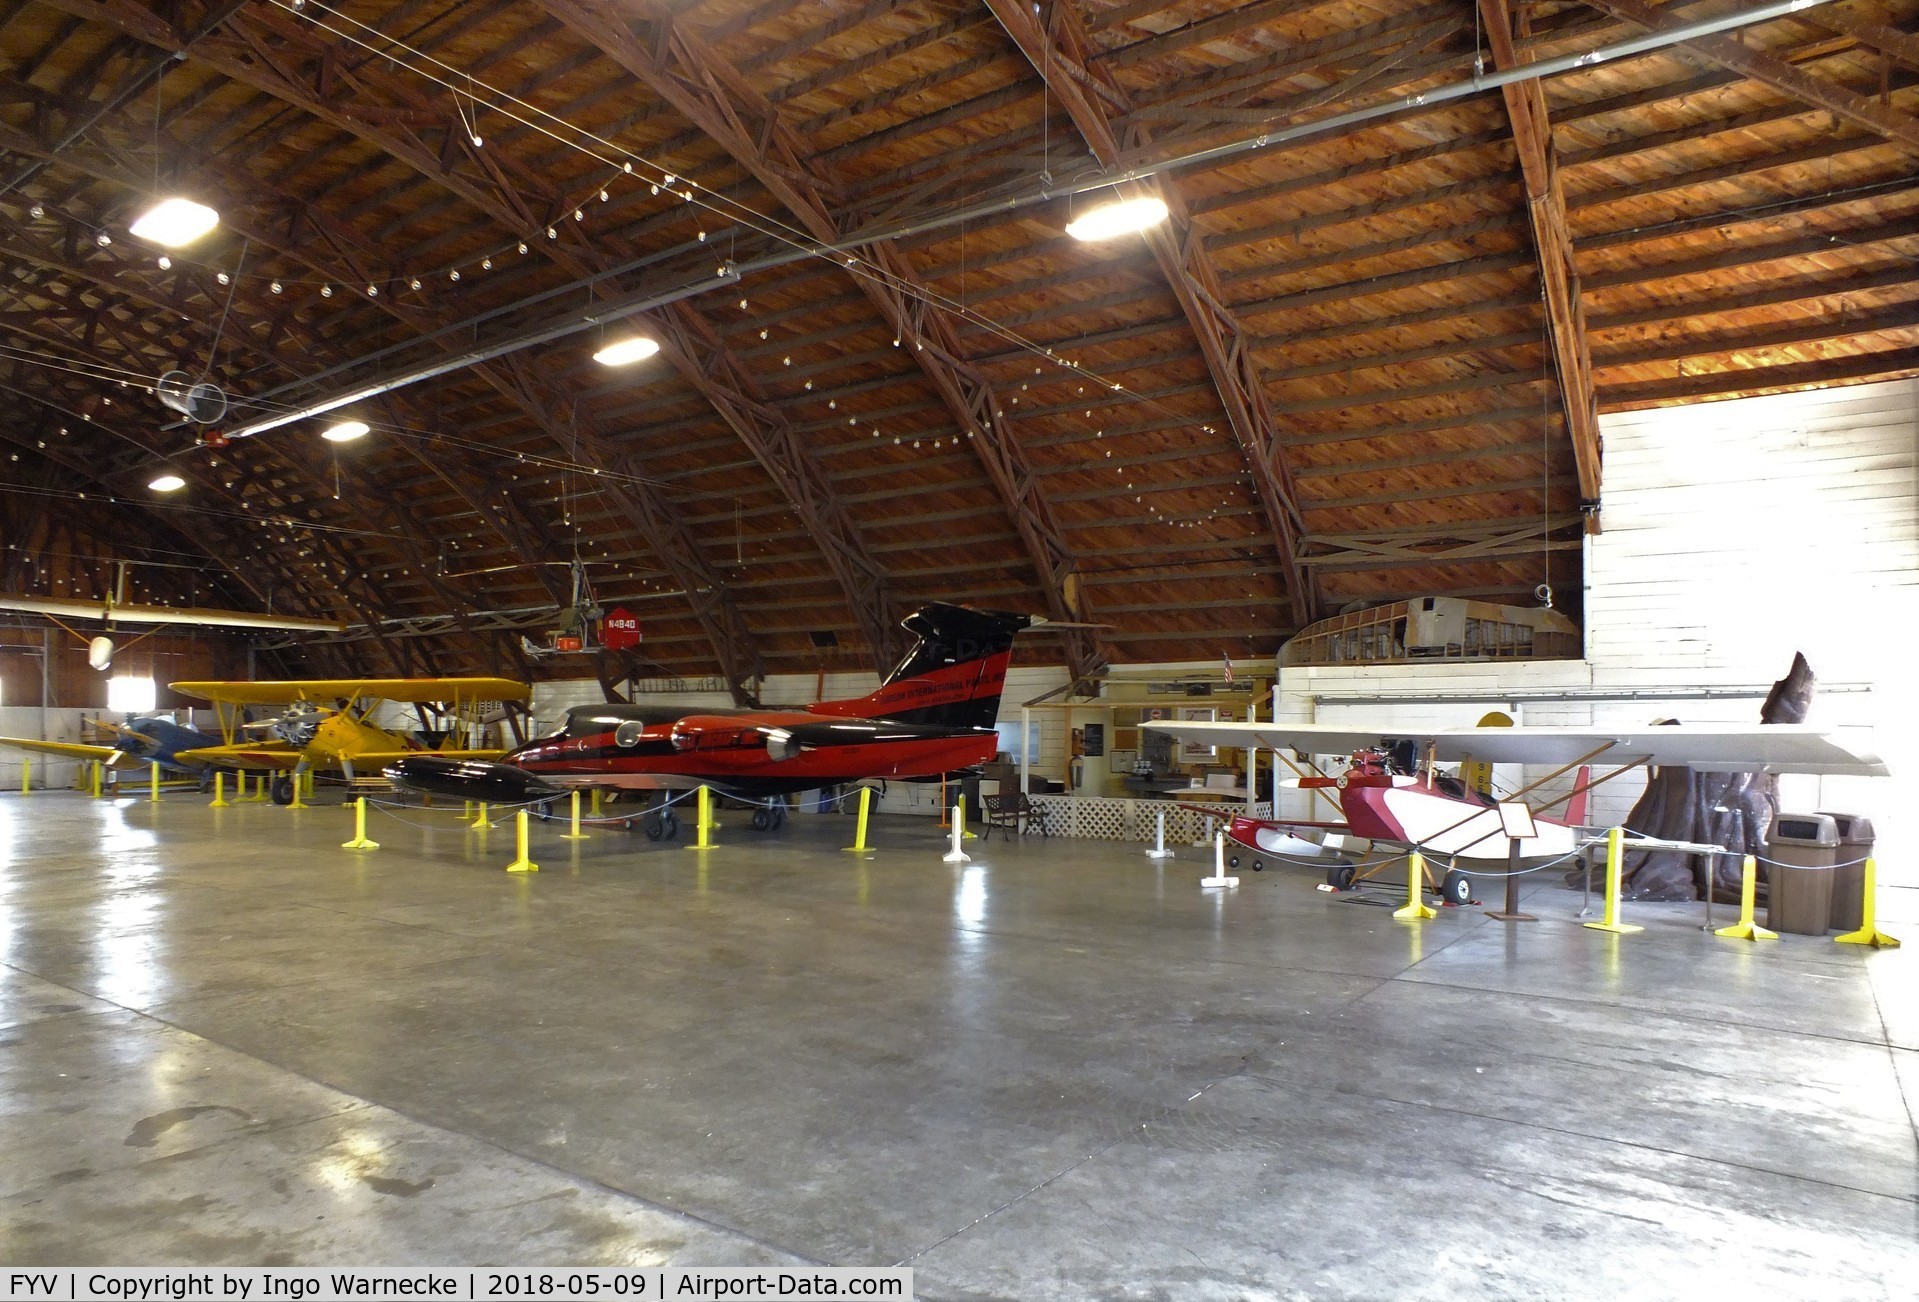 Drake Field Airport (FYV) - inside the historic 1940s hangar of the Arkansas Air & Military Museum at Fayetteville Municpal Airport / Drake Field, Fayetteville AR